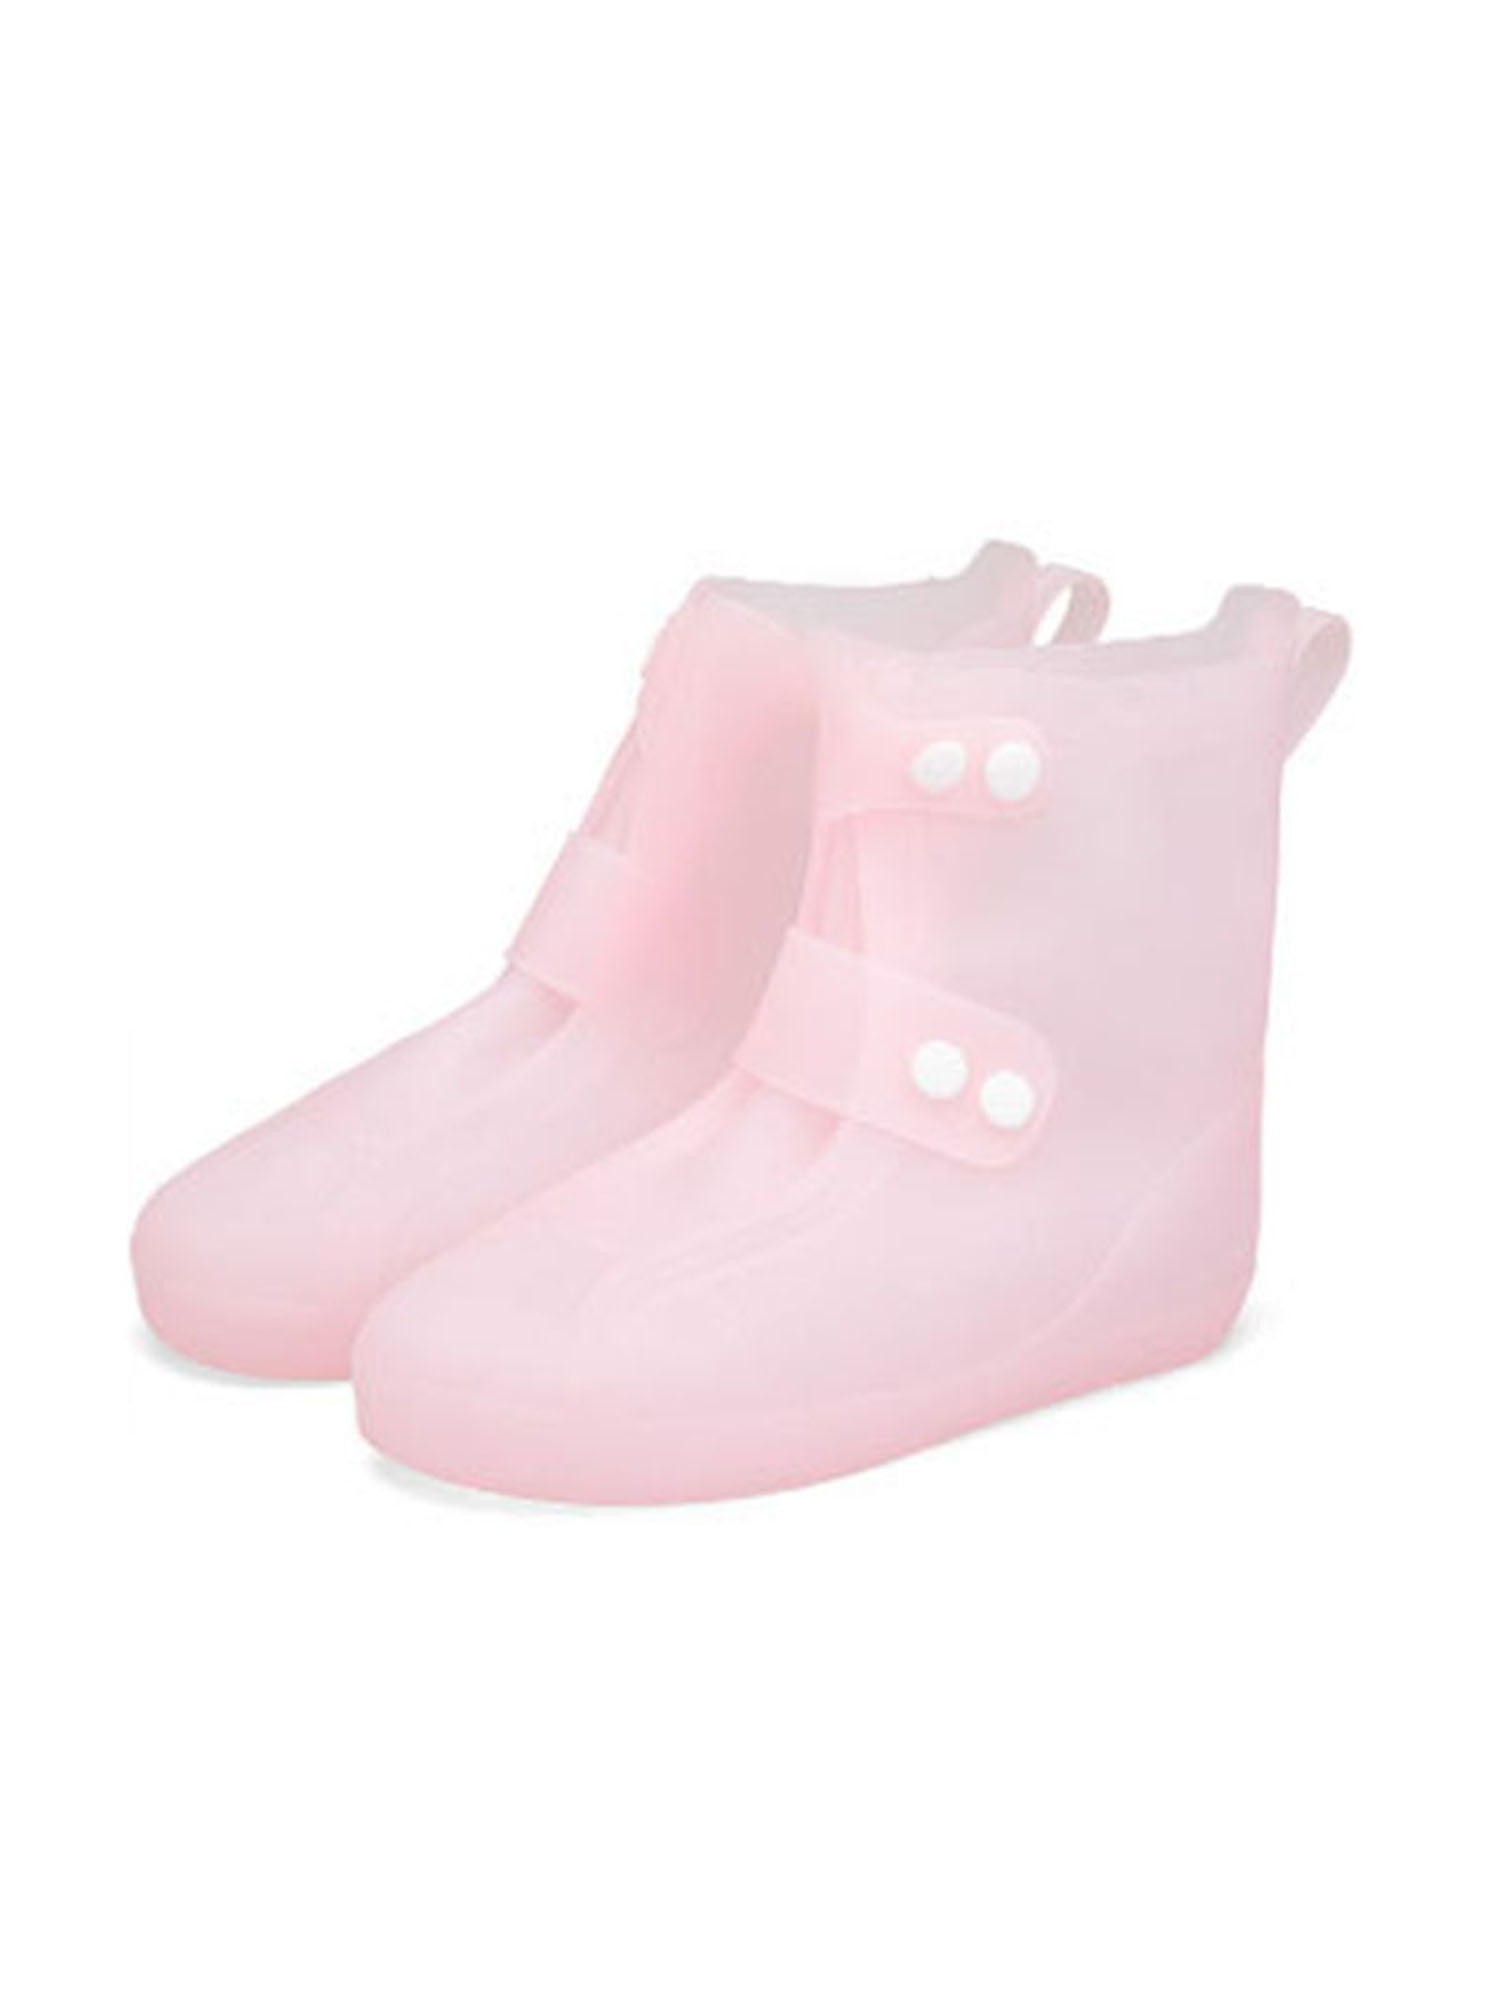 Girls Paw Patrol Wellington Boots Pink Rain Wellies Mid Calf Snow Boots Size 